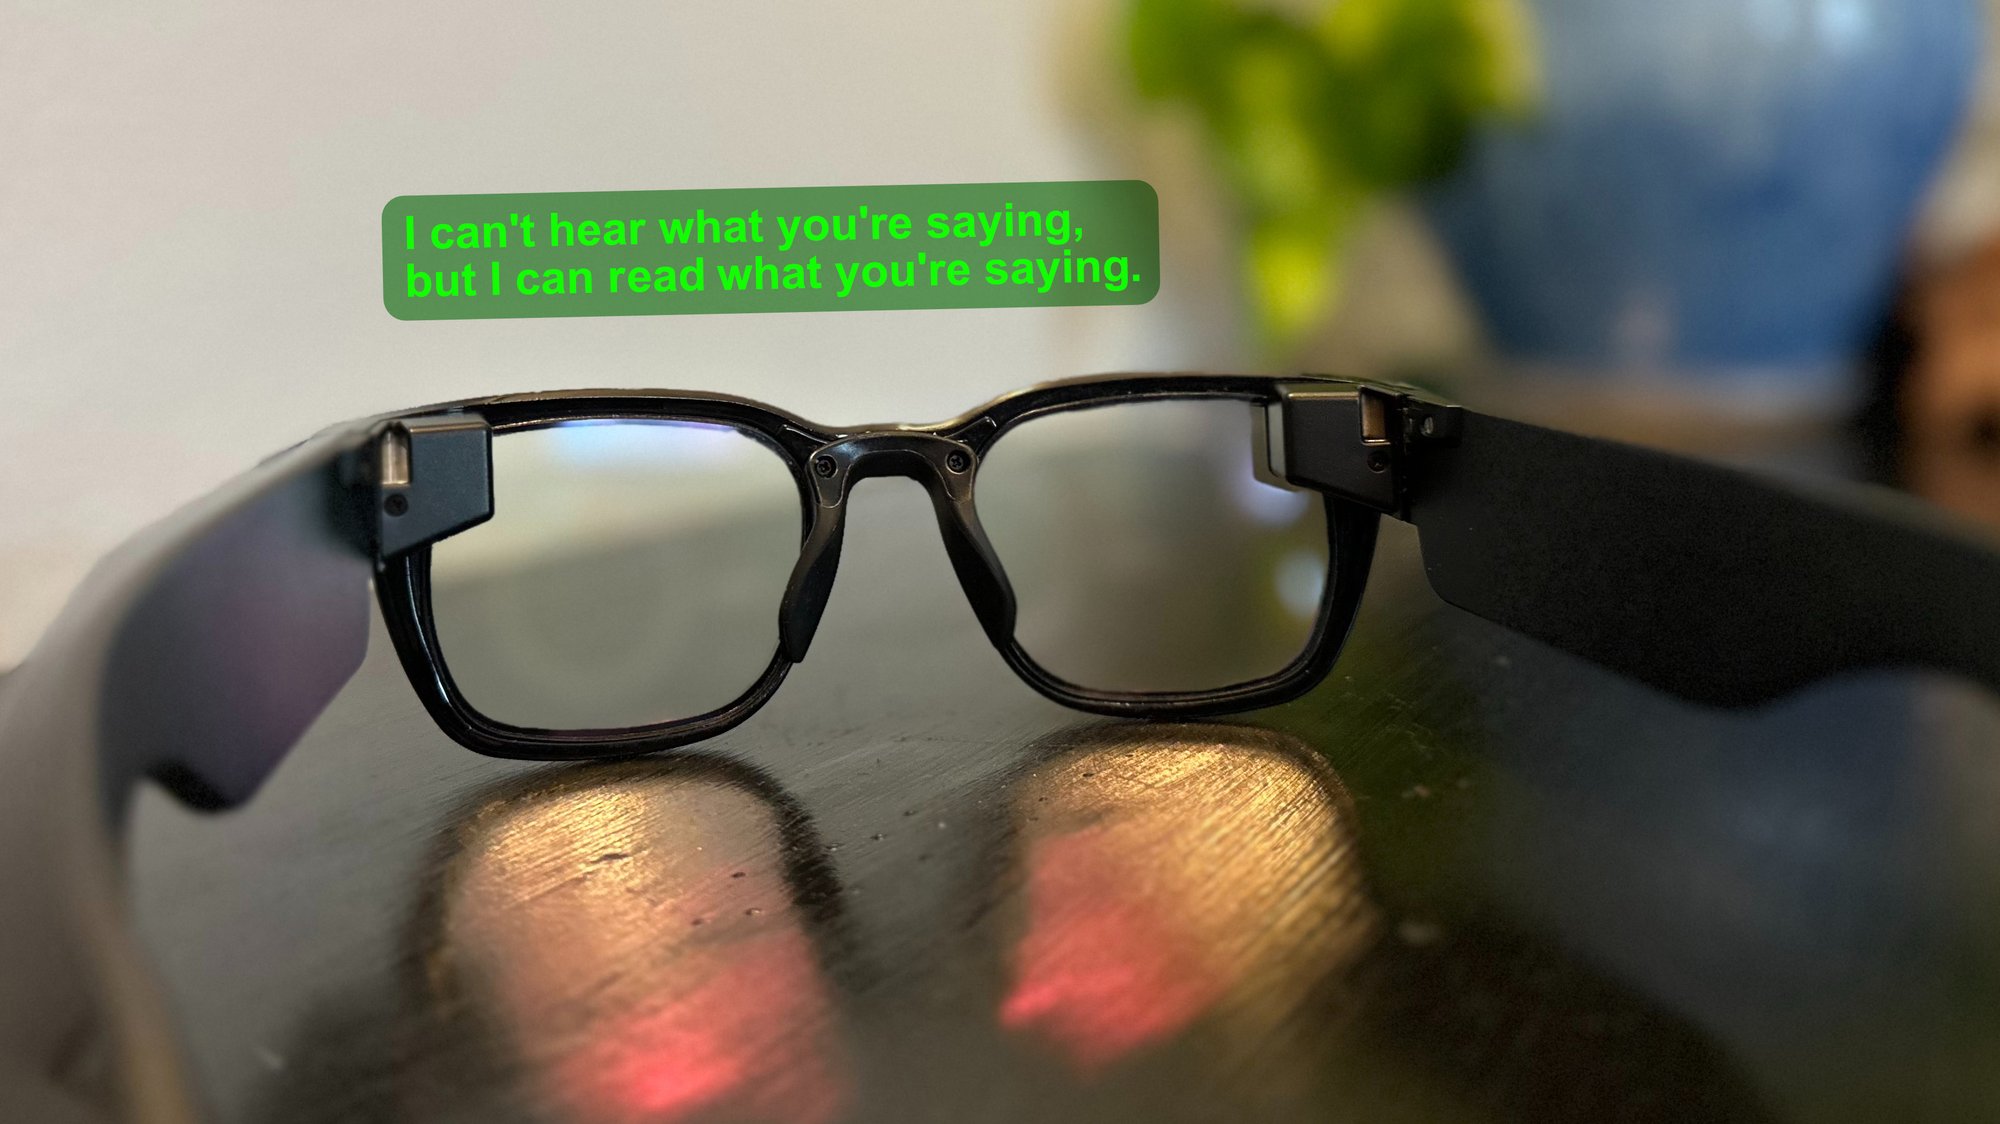 https://www.xander.tech/hs-fs/hubfs/Behind%20the%20Glasses%2016x9.jpg?width=2000&height=1124&name=Behind%20the%20Glasses%2016x9.jpg